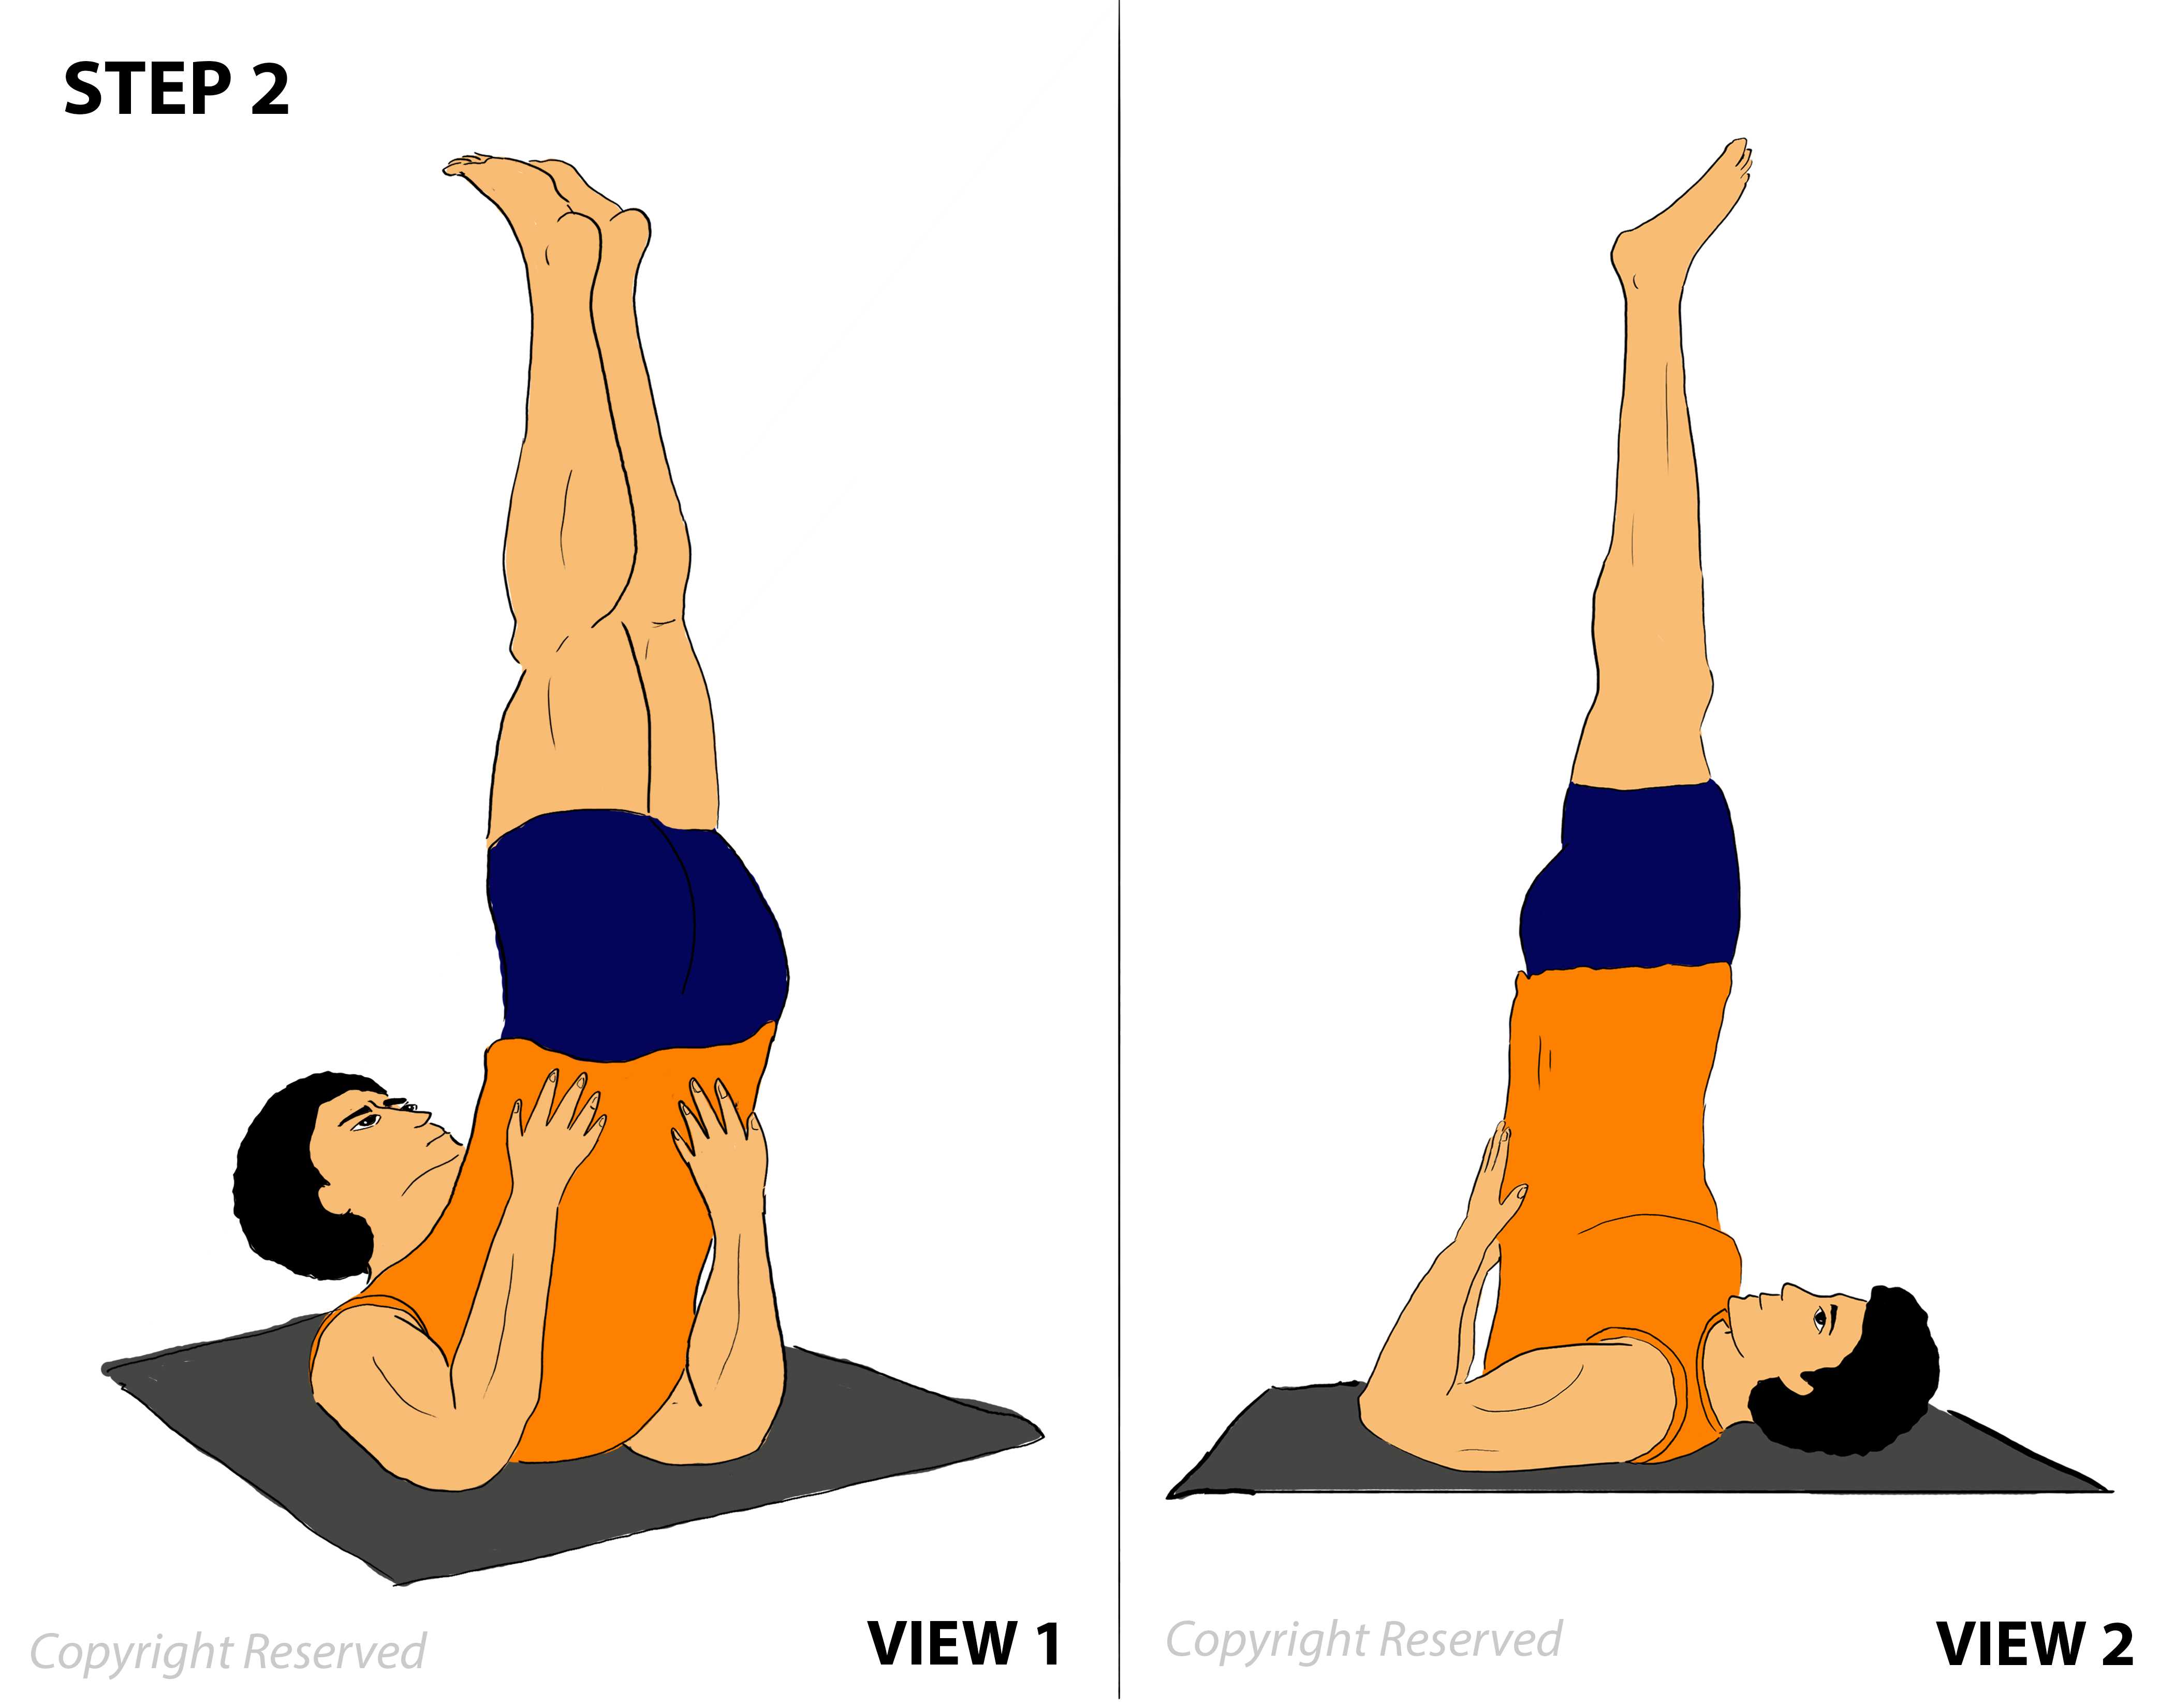 How To Do Salabhasana ( Locust Yoga Pose ) - Indian Youth